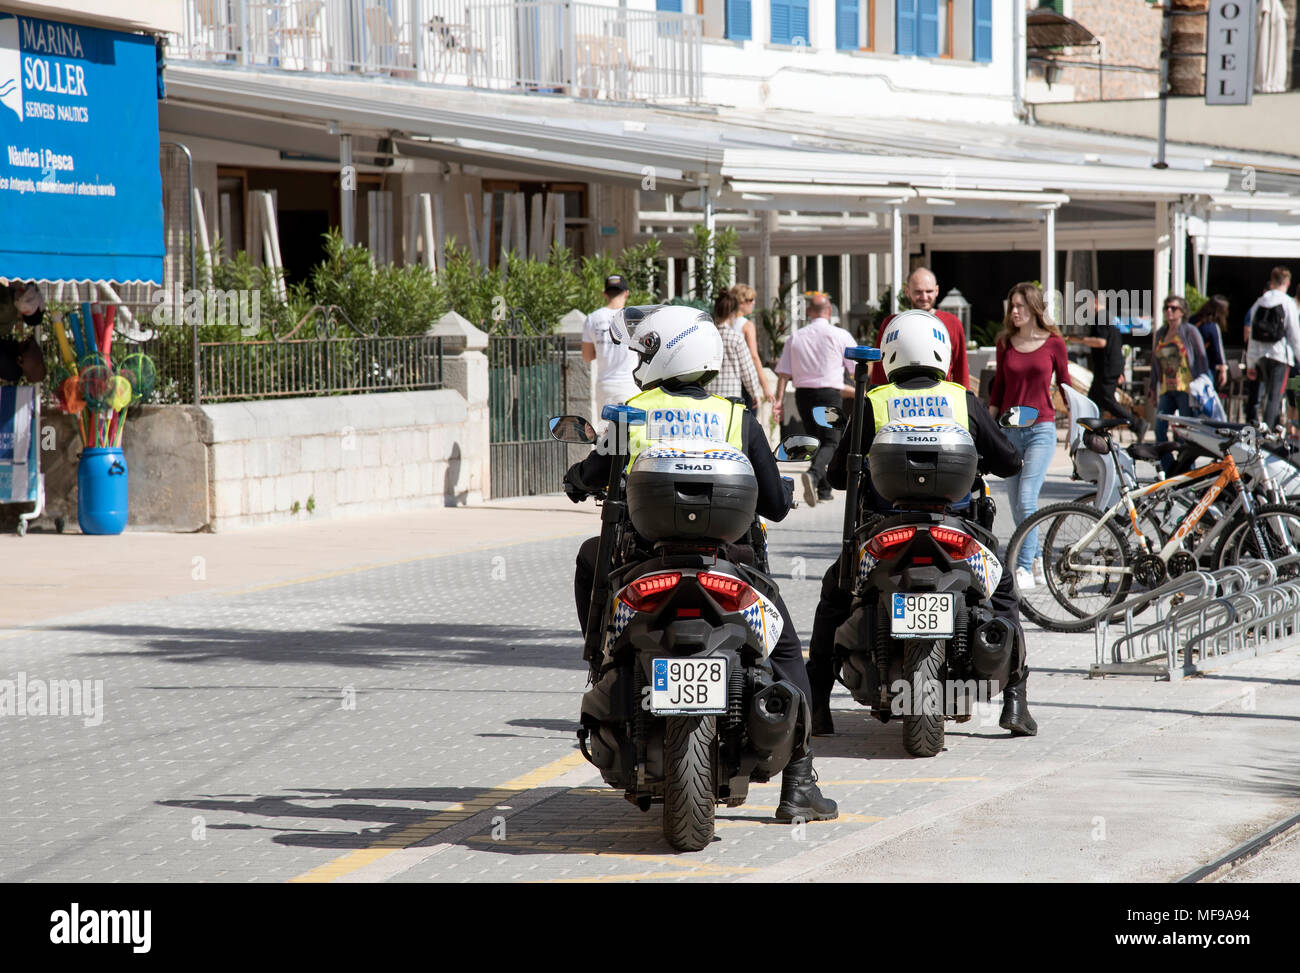 Port de Soller, Mallorca, Spanien, 2018. Lokale Polizisten mit Roller in der Innenstadt Stockfoto